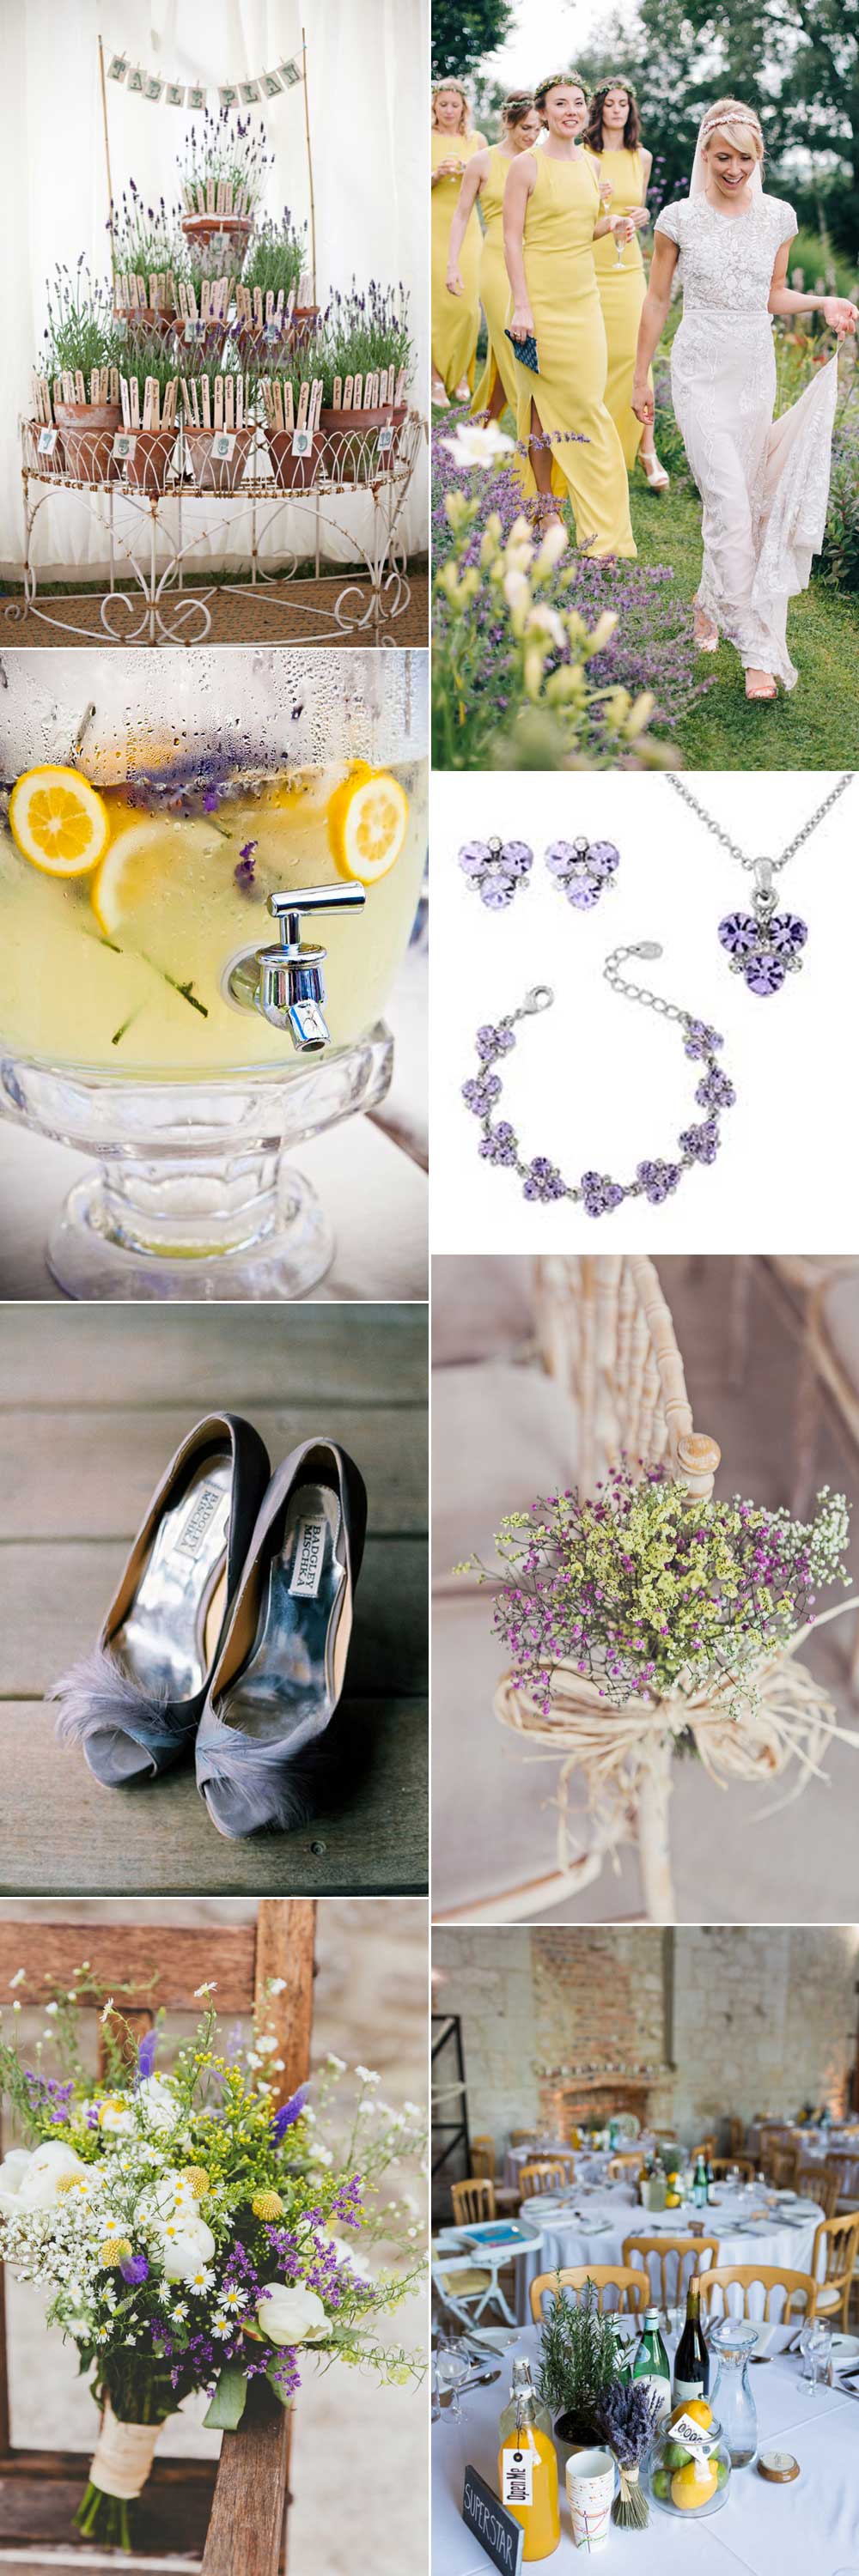 Lemon and lavender wedding inspirations